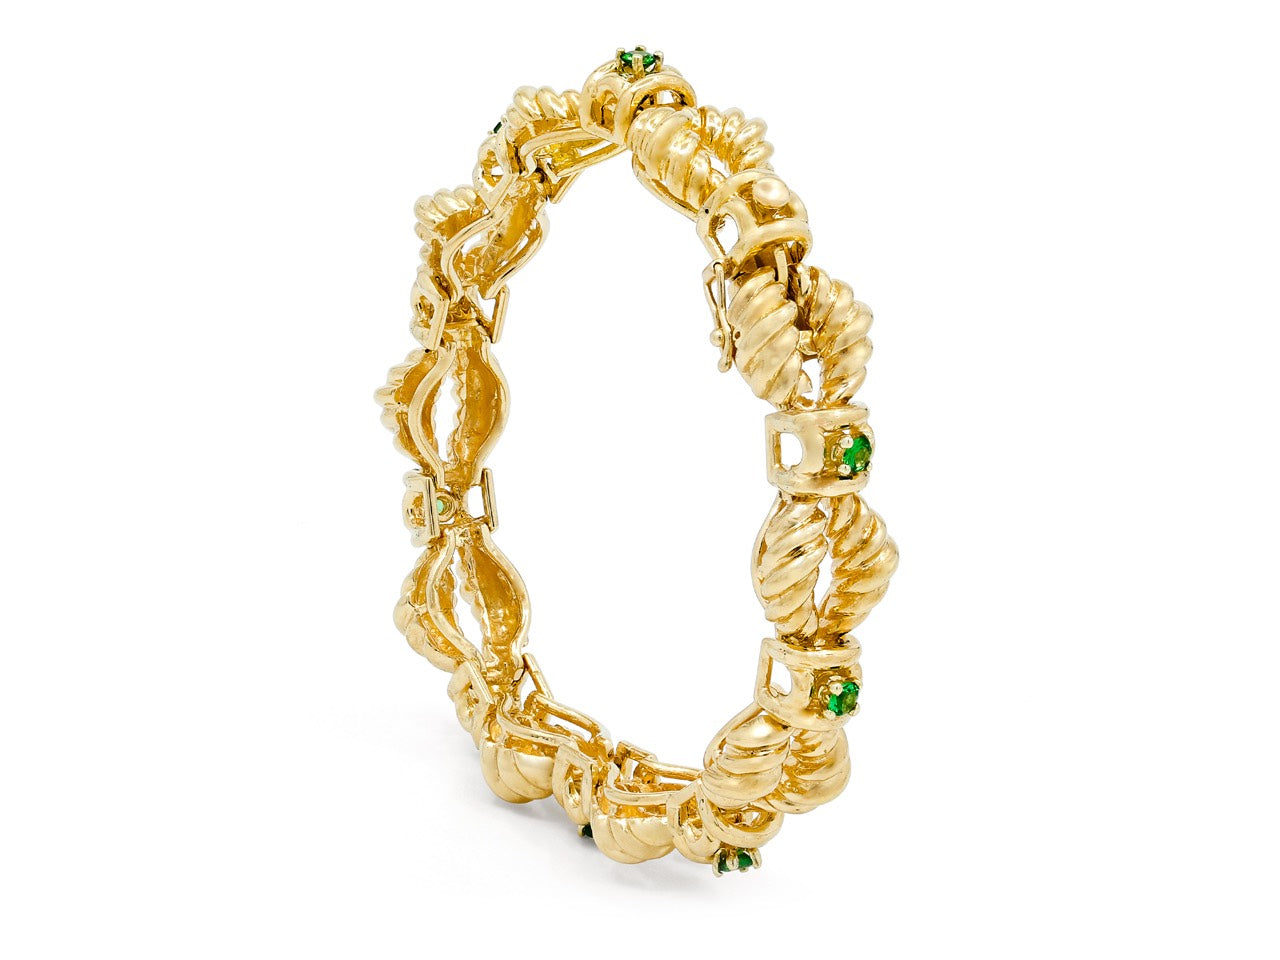 Green Garnet and Gold Bracelet, in 18K